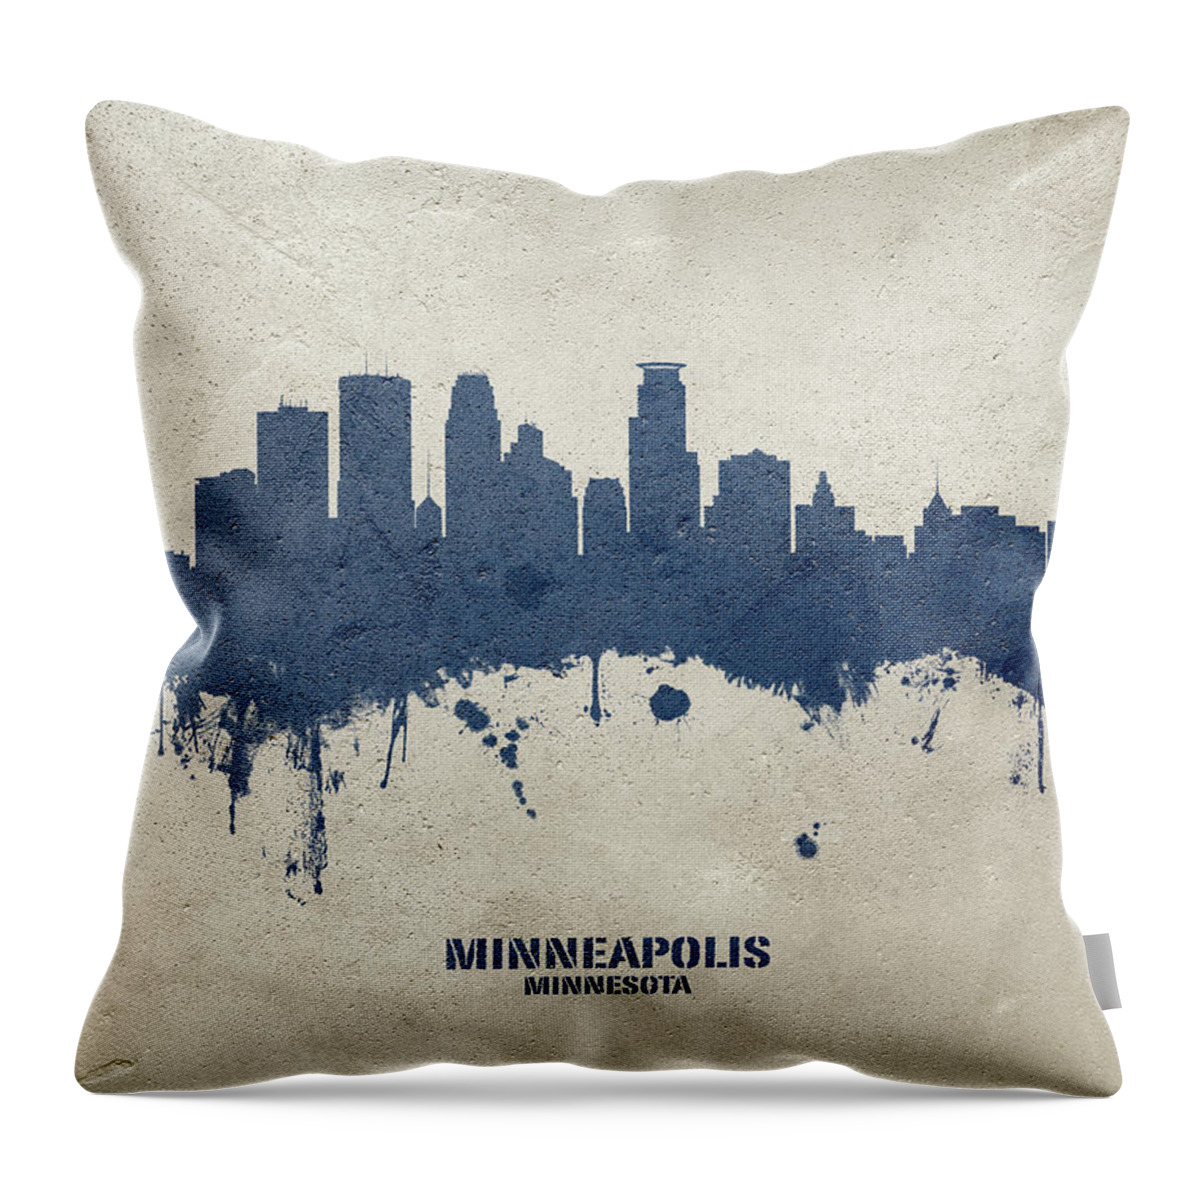 Minneapolis Throw Pillow featuring the digital art Minneapolis Minnesota Skyline by Michael Tompsett